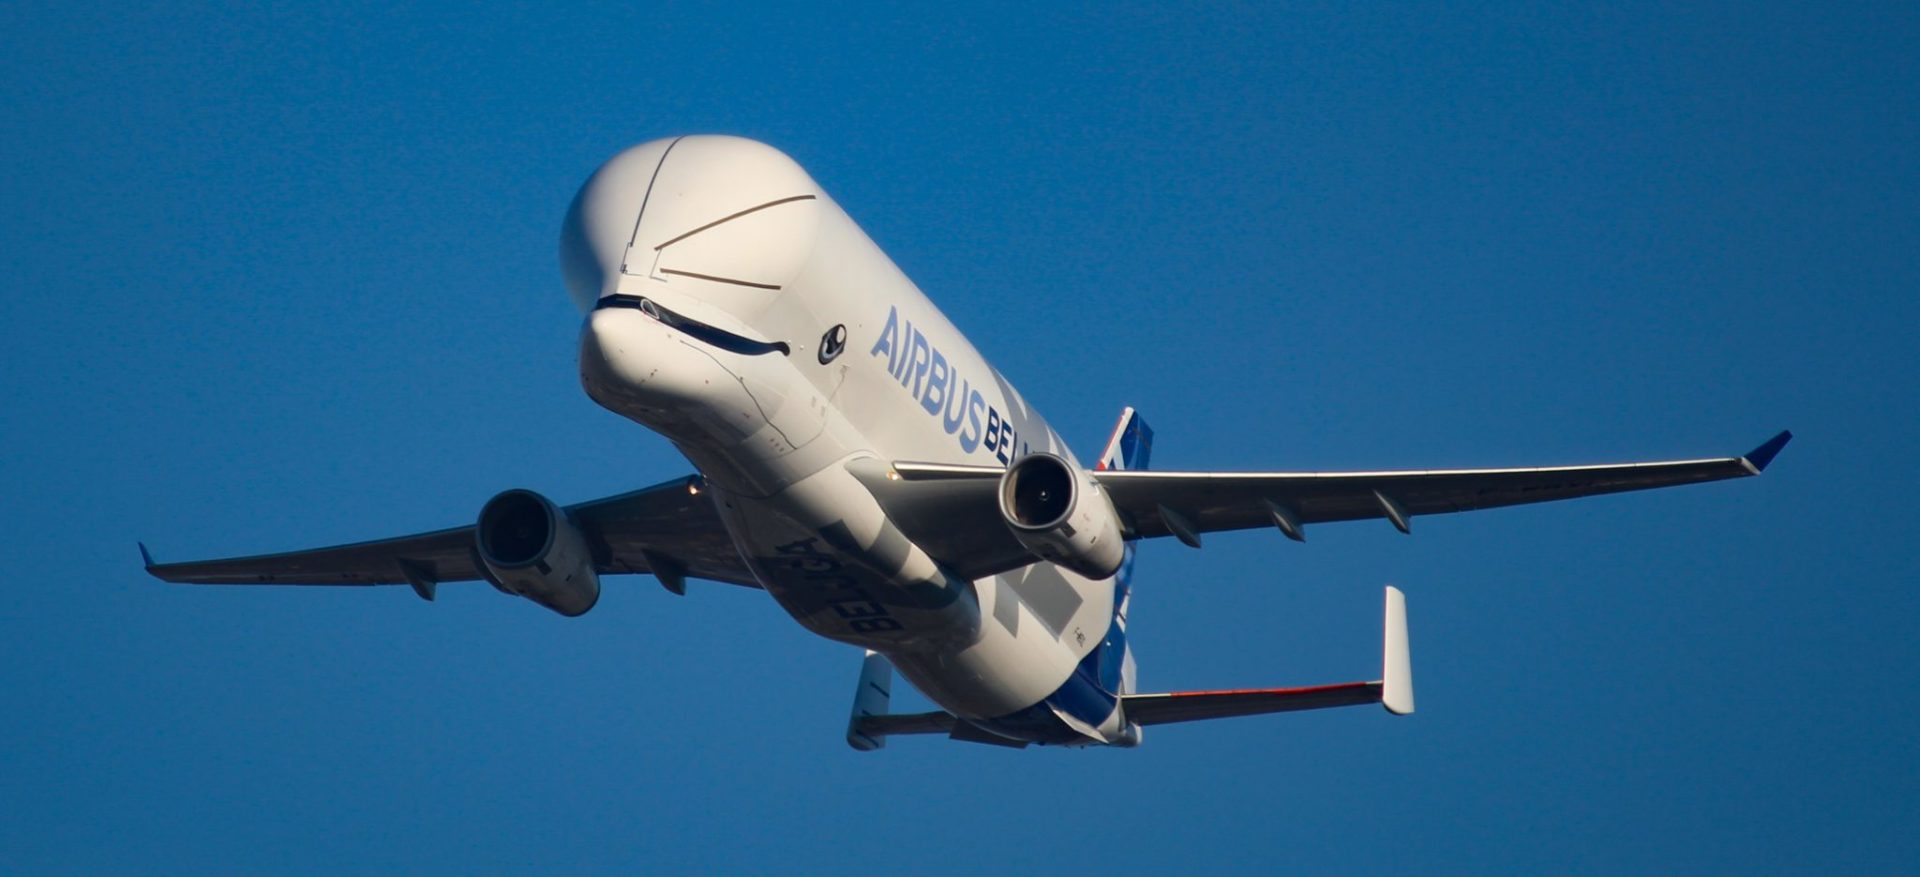 Airbus Beluga XL arrives at Airbus Filton (Image: Aviation Media Co.)